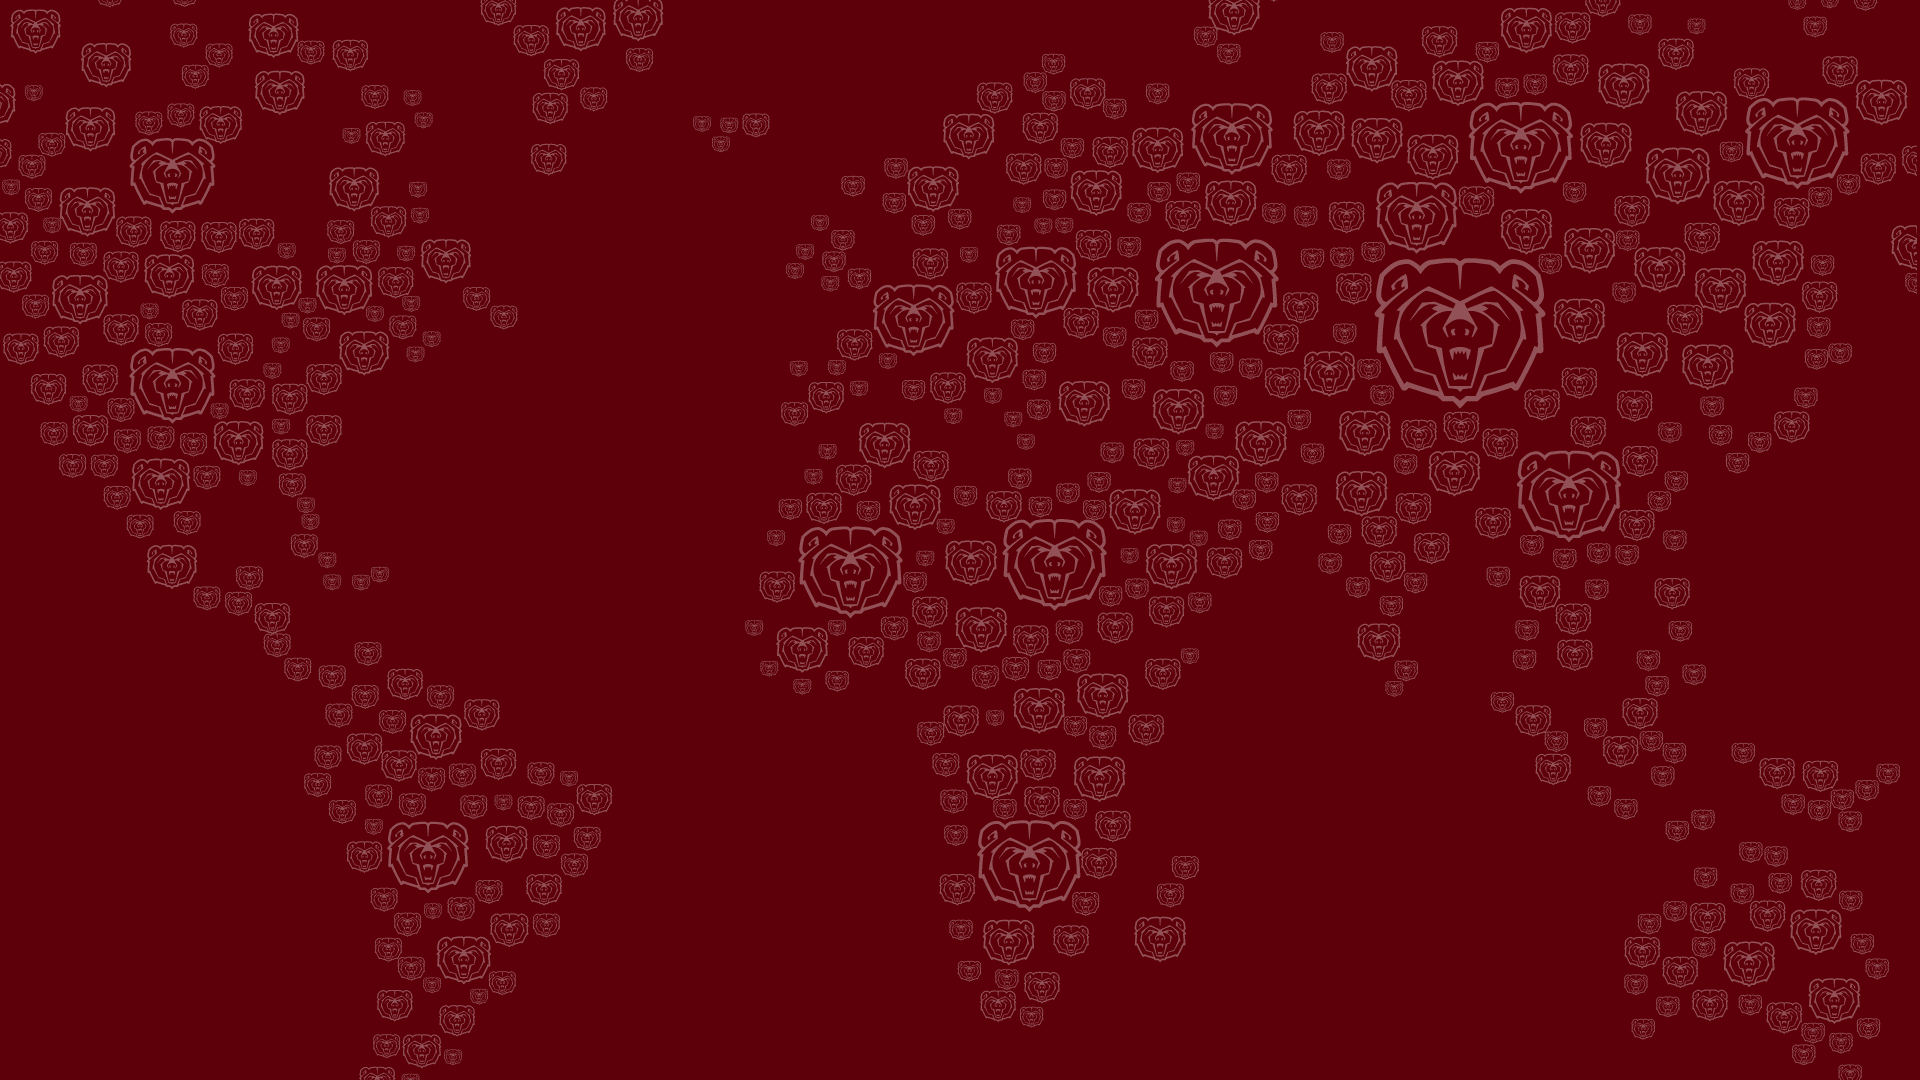 World map made of Bear head logos